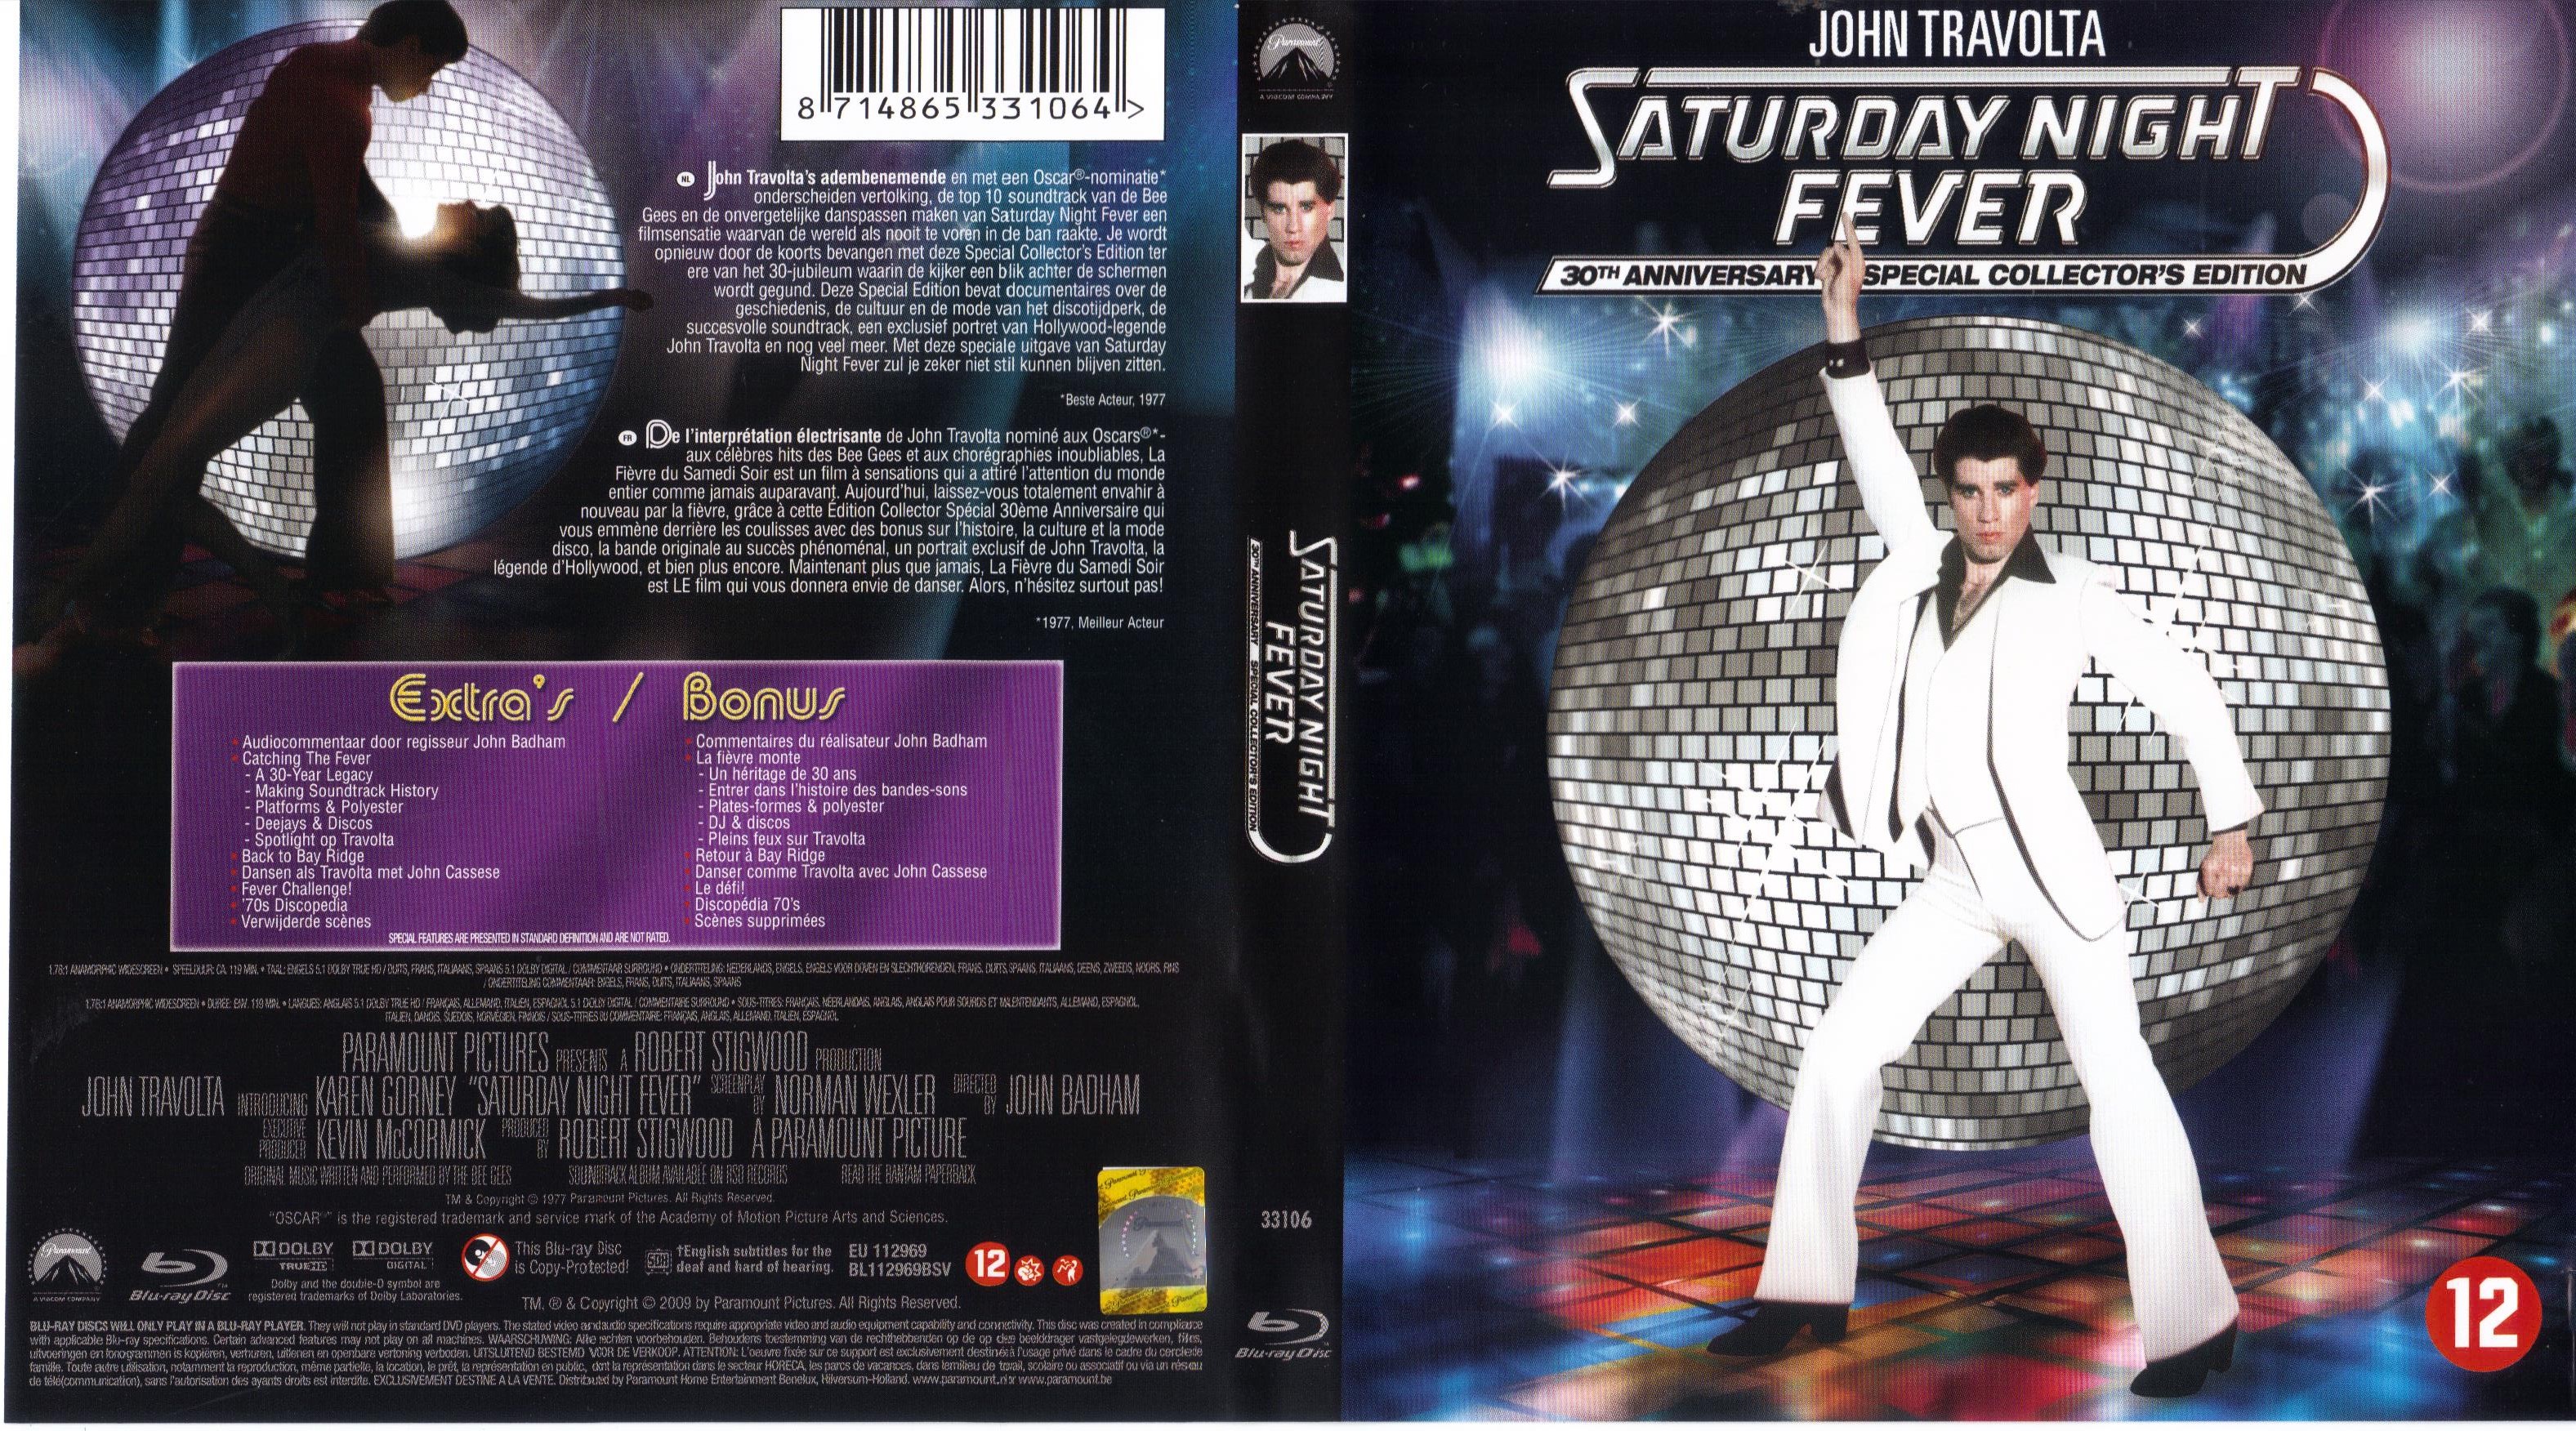 Jaquette DVD Saturday night fever (BLU-RAY)